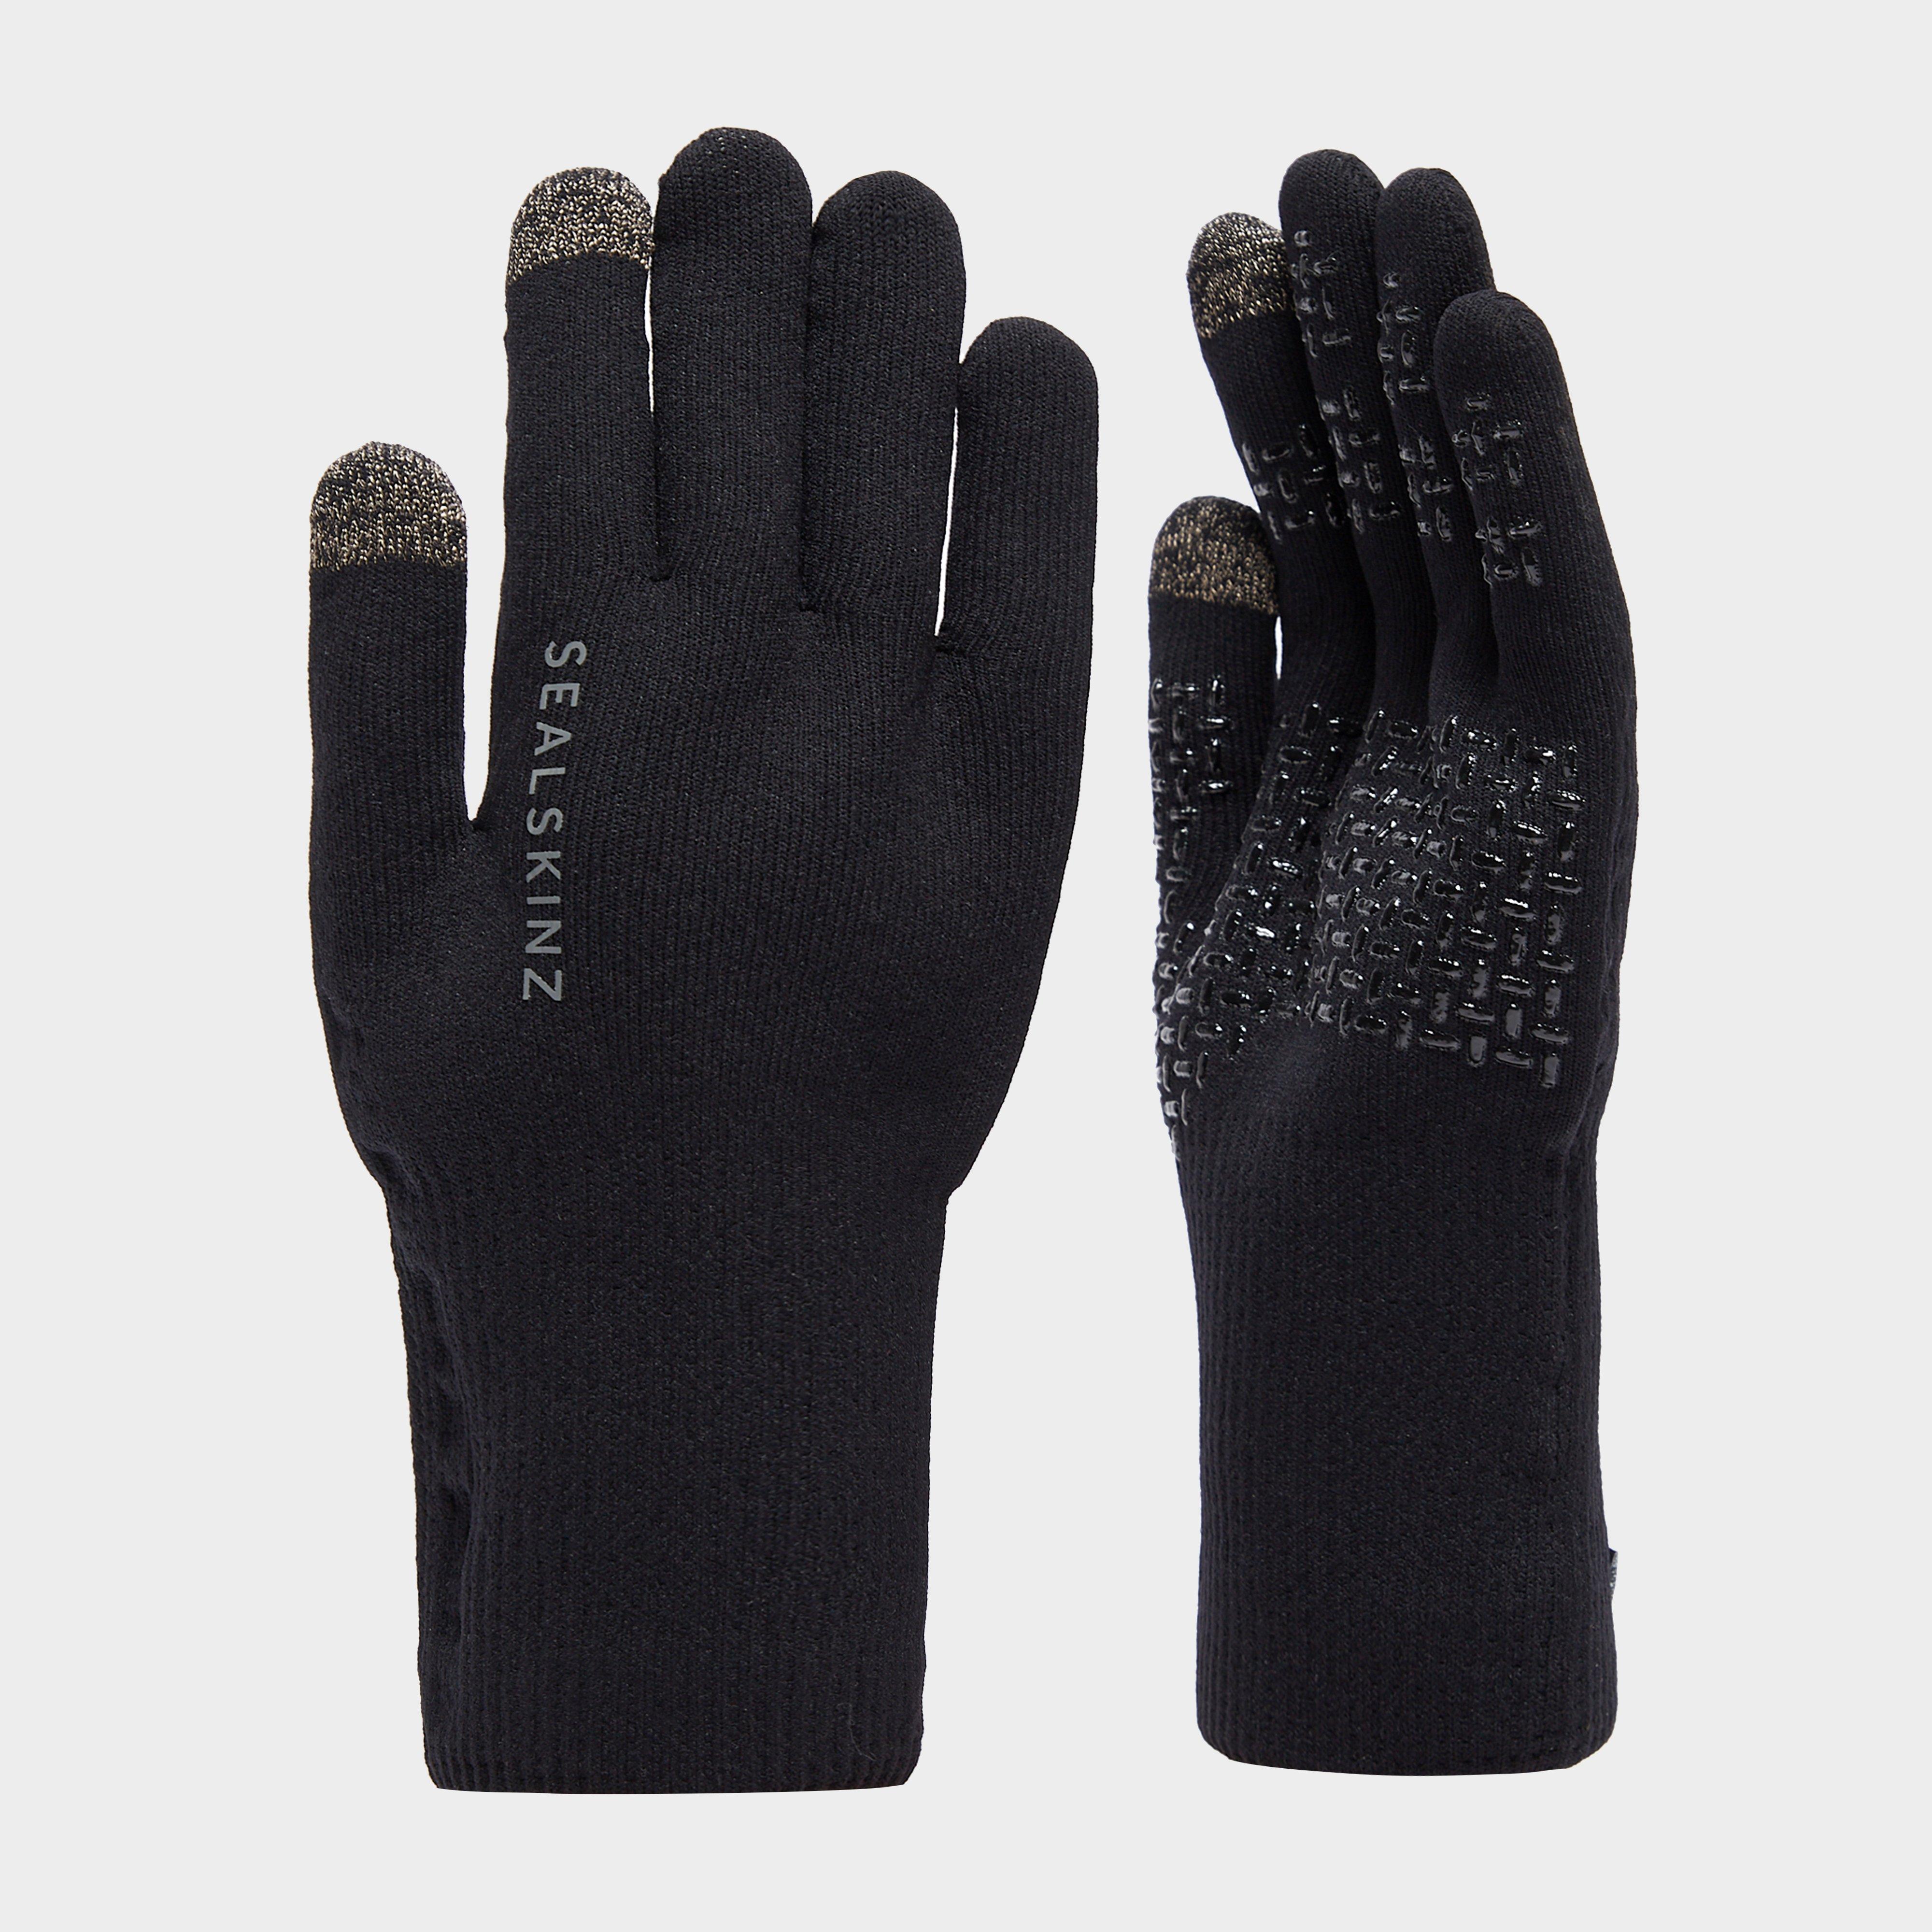 Sealskinz Waterproof All Weather Ultra Grip Glove  Black